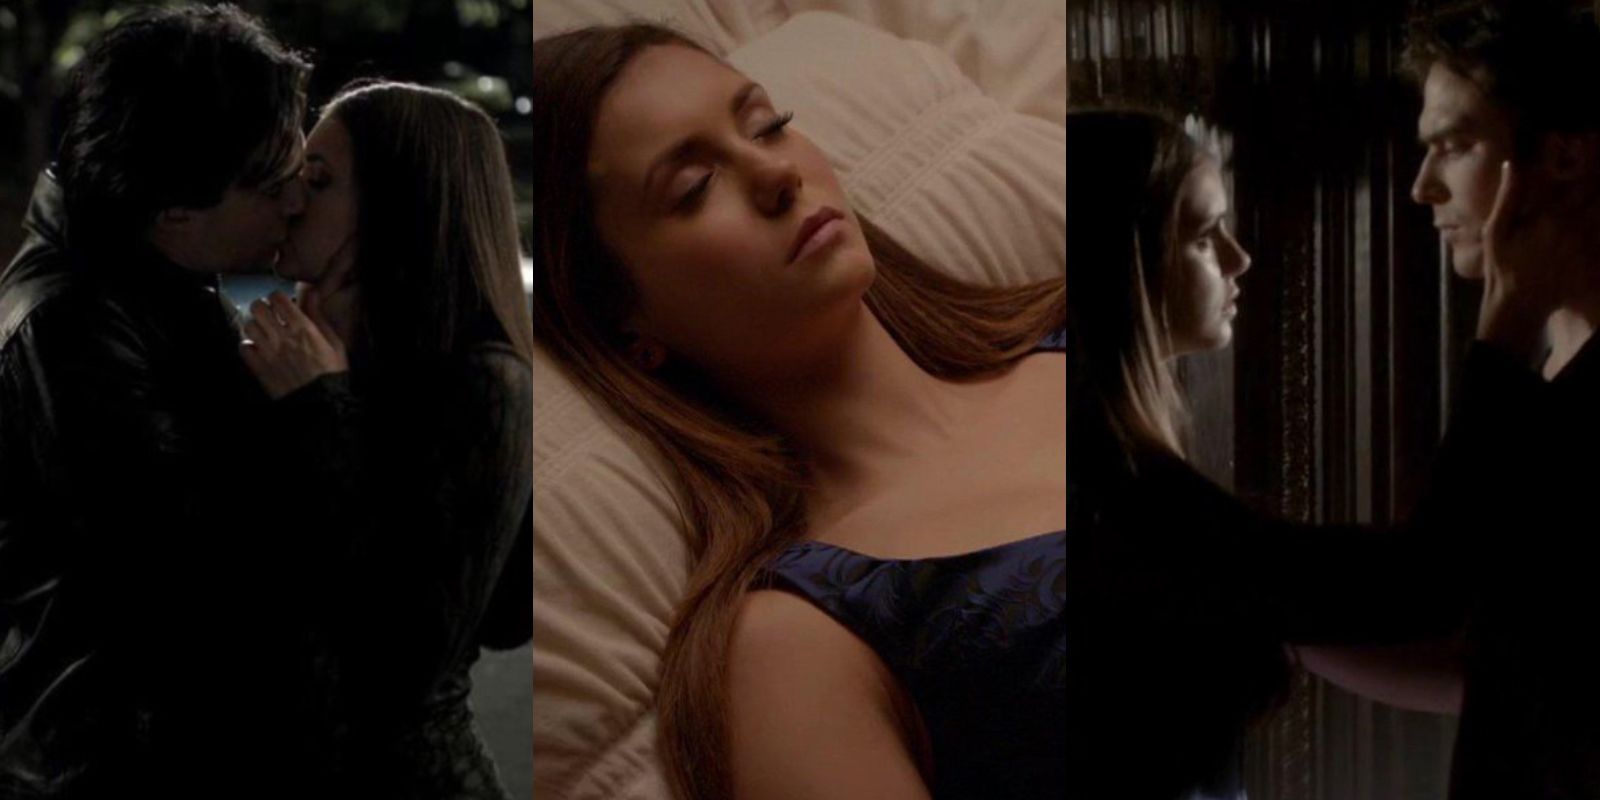 Vampire Diaries' Damon & Elena's Rain Kiss Finally Happens